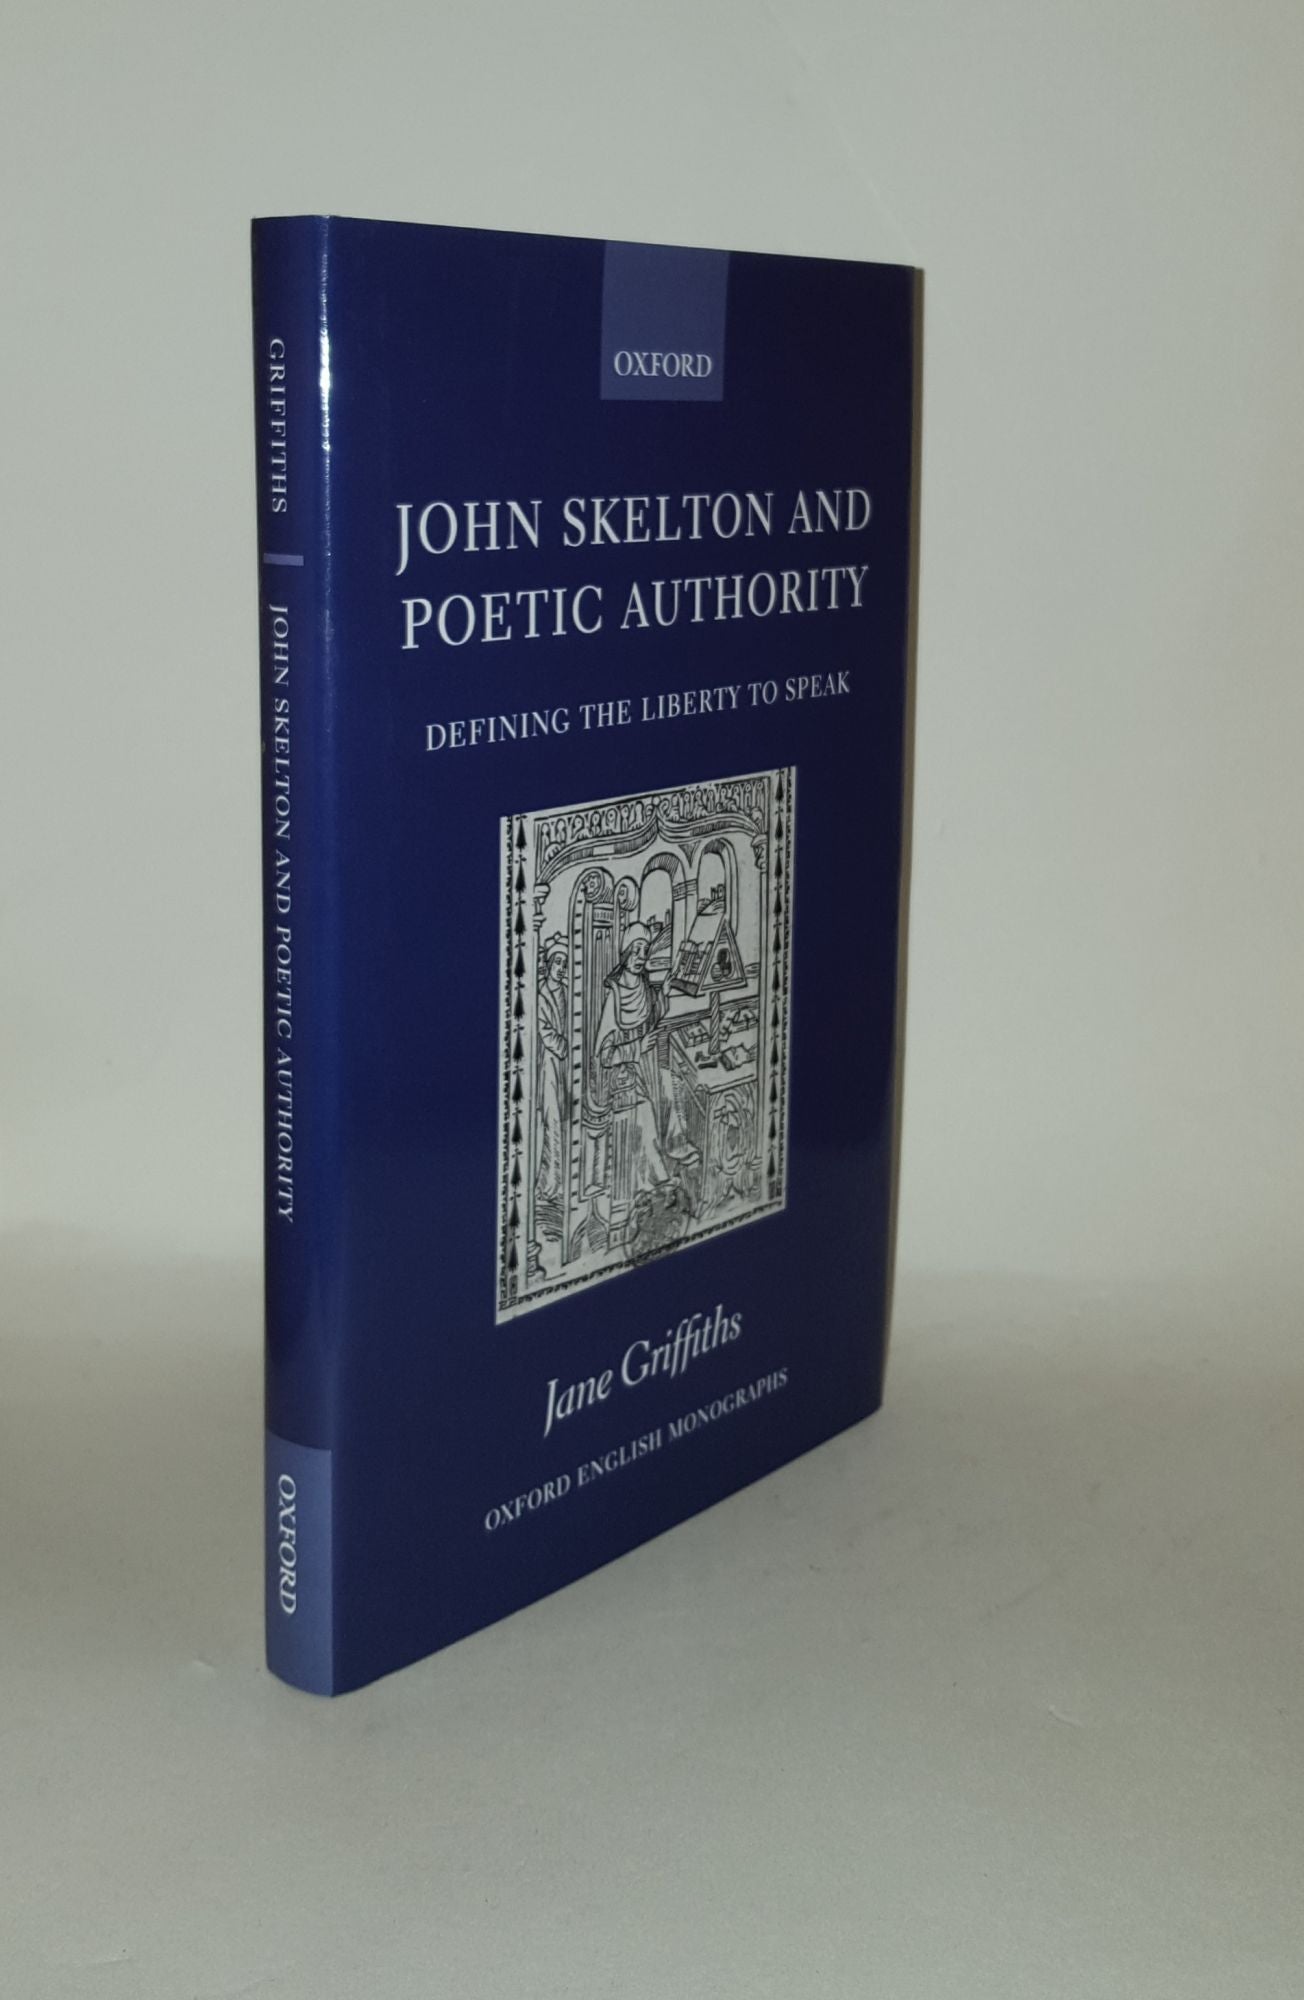 GRIFFITHS Jane - John Skelton and Poetic Authority Defining the Liberty to Speak (Oxford English Monographs)